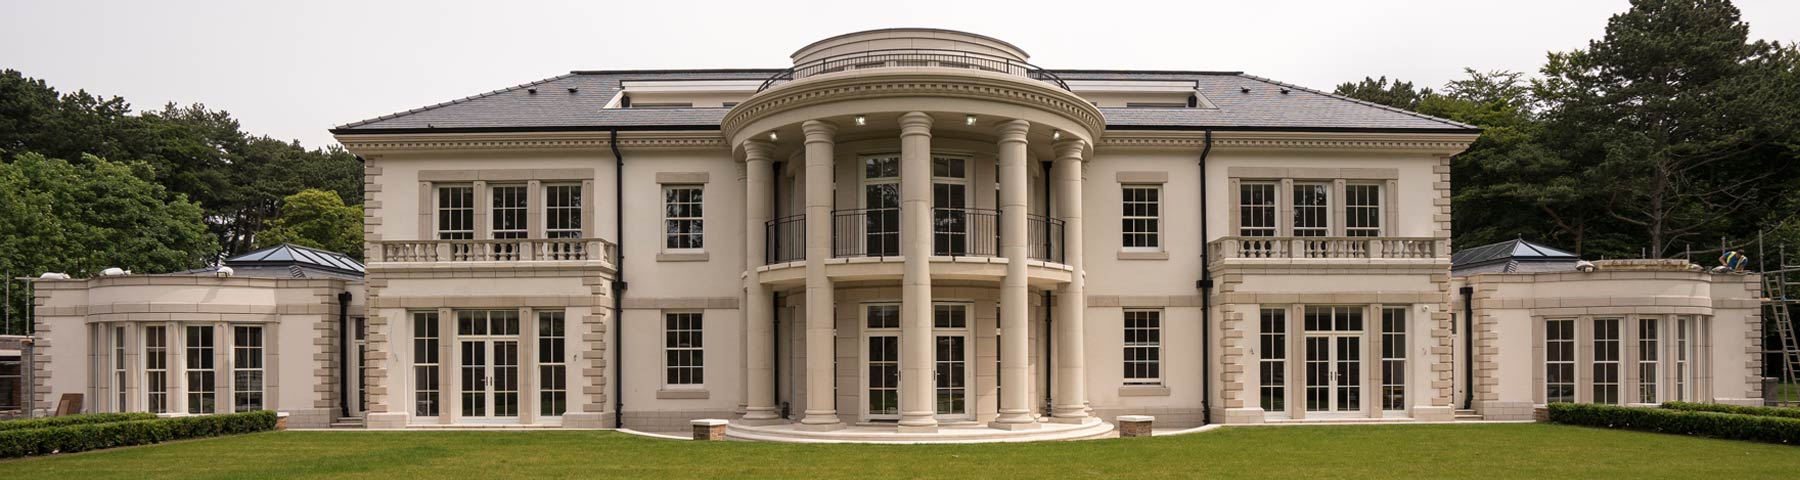 Palladian Mansion, Firwood Estate - Formby